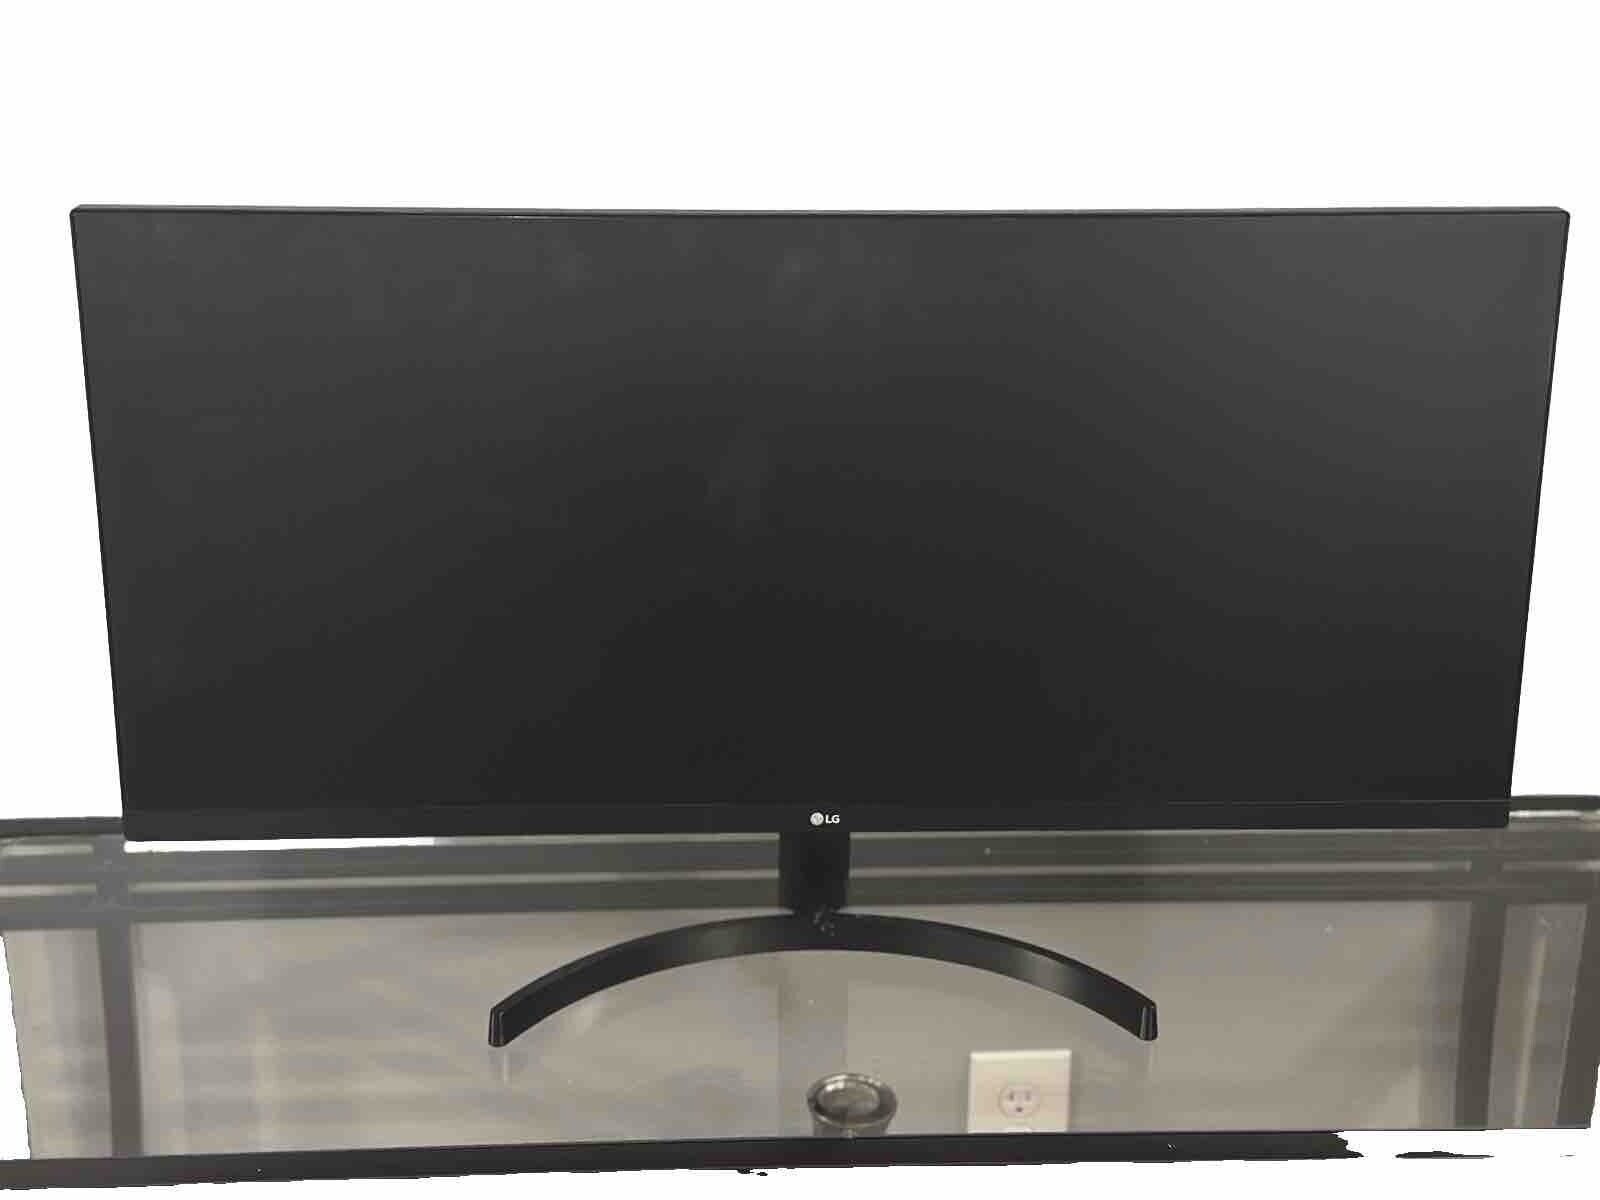 LG Ultrawide 34WL500B 34 inch Widescreen IPS LED Monitor